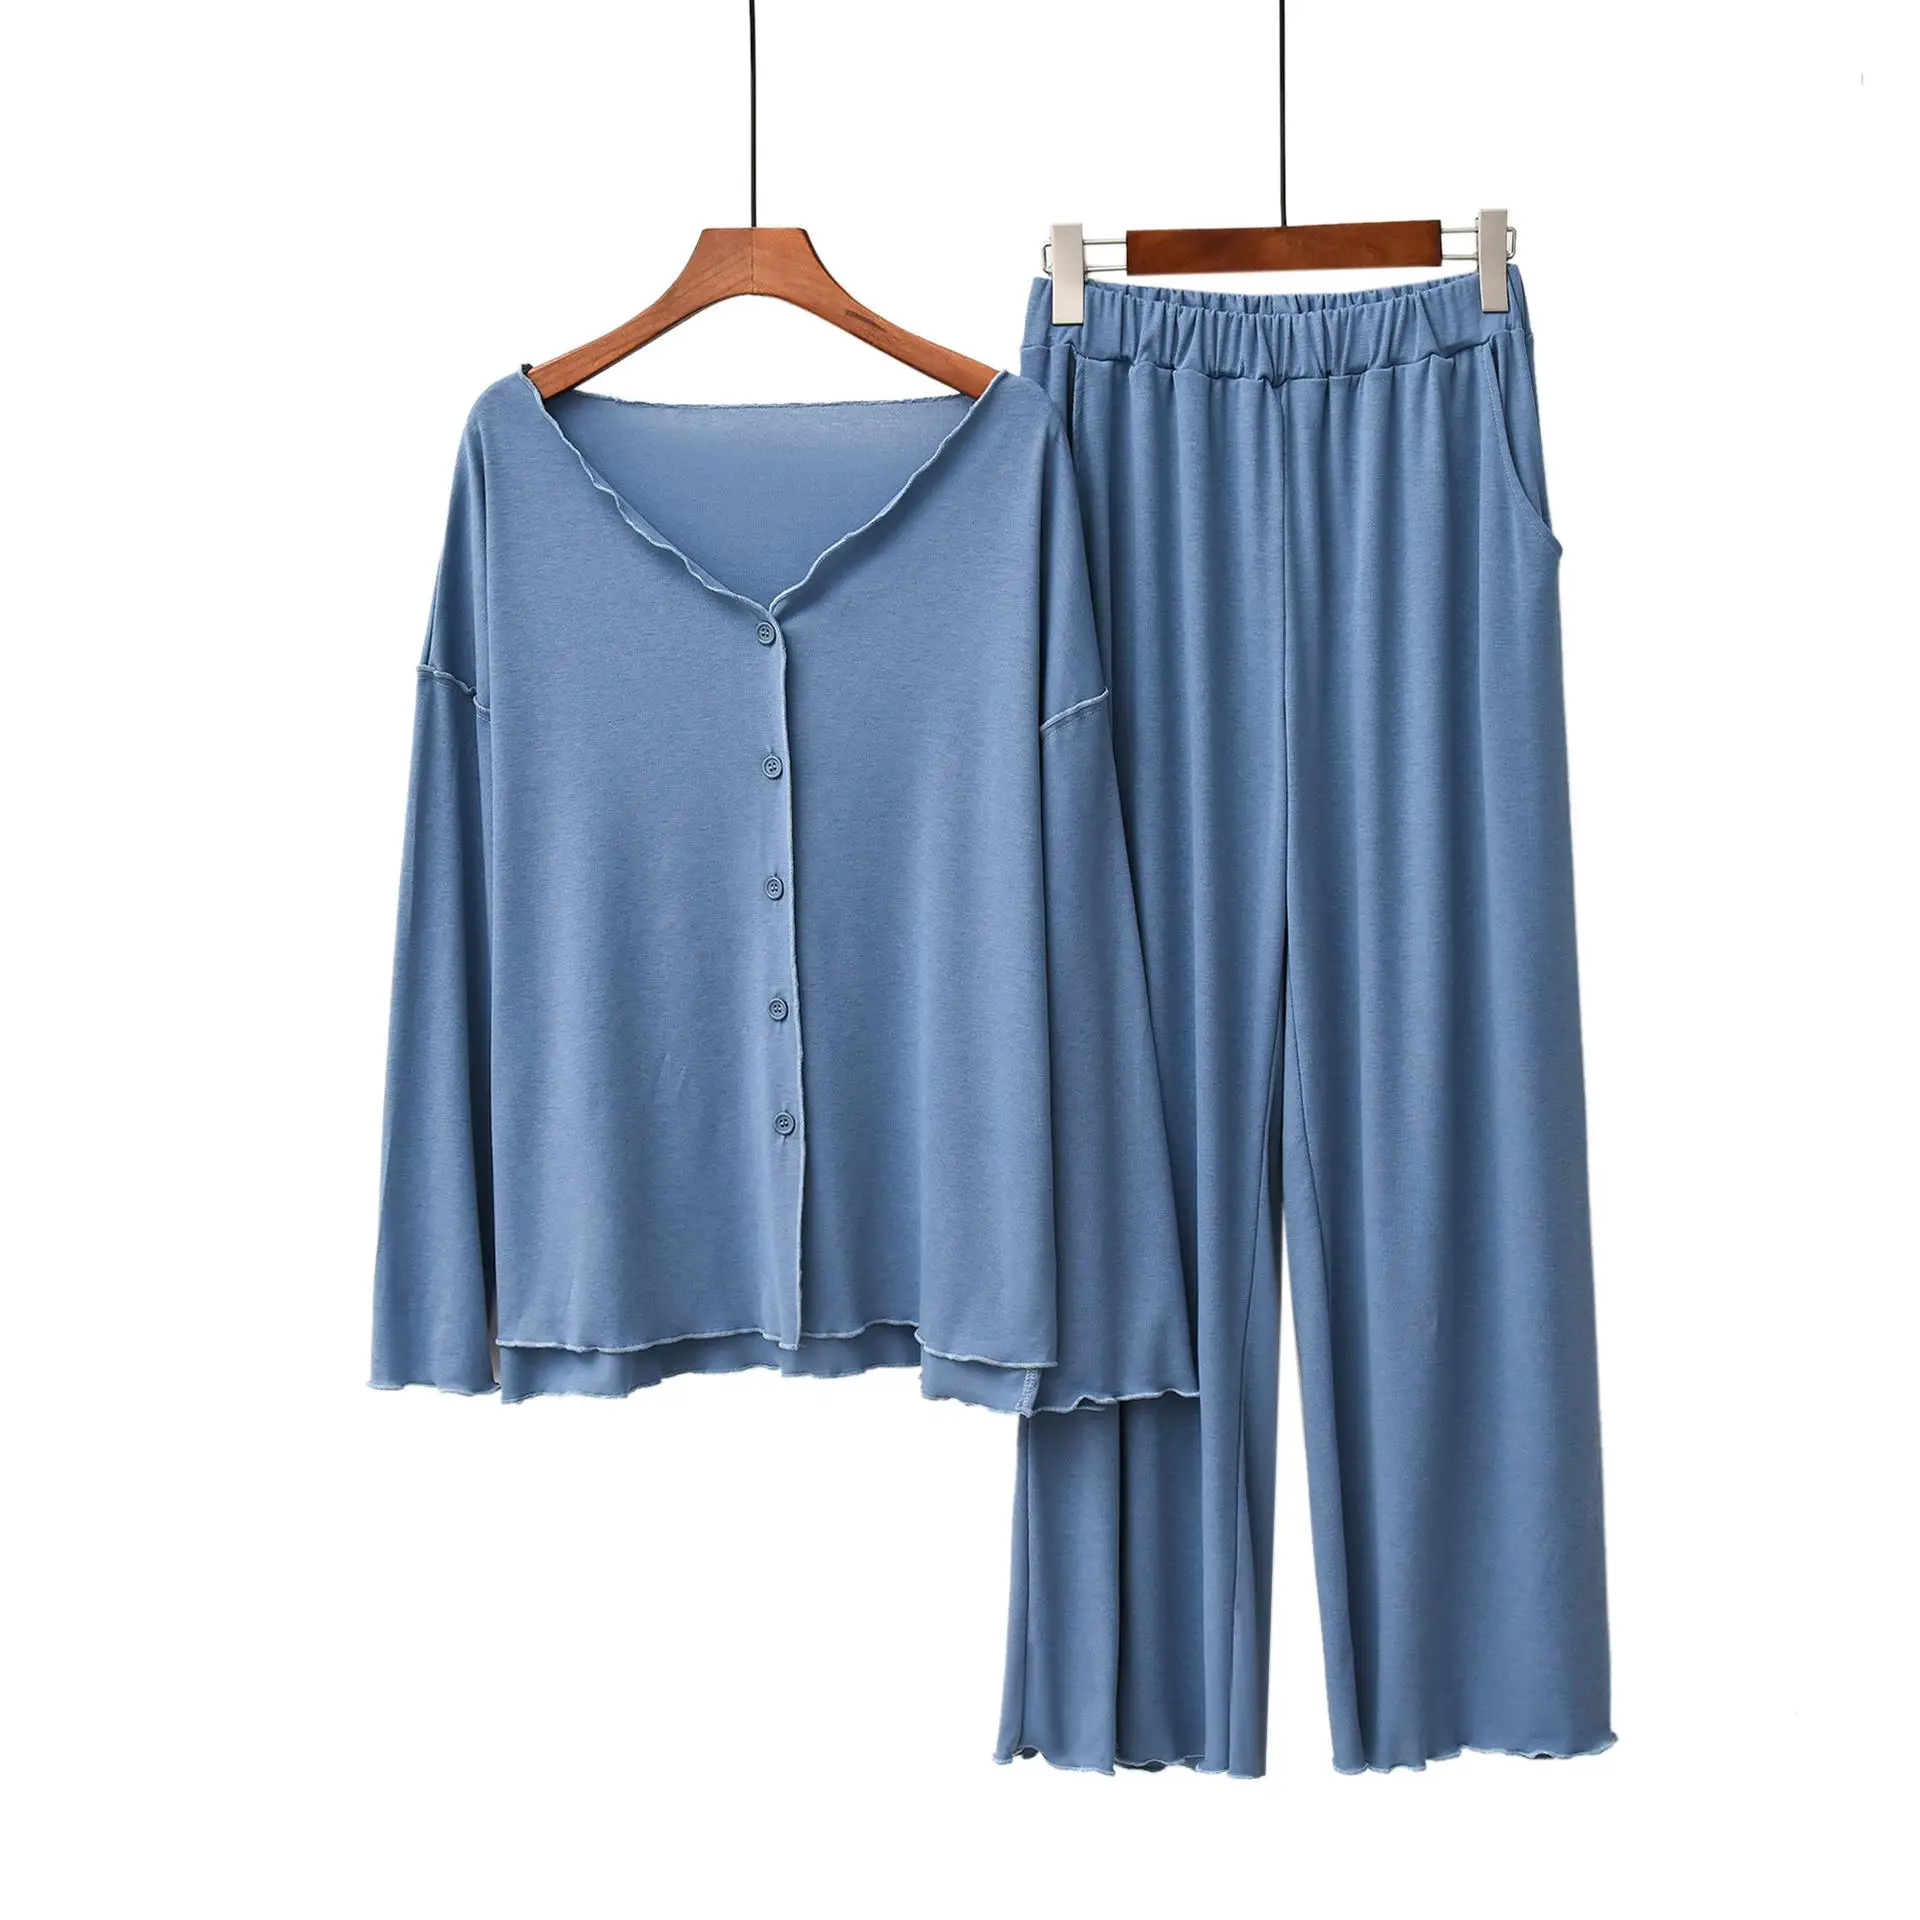 Хлопковая пижама размера плюс женская домашняя пижама одежды Женская 1187 - Цвет: Blue